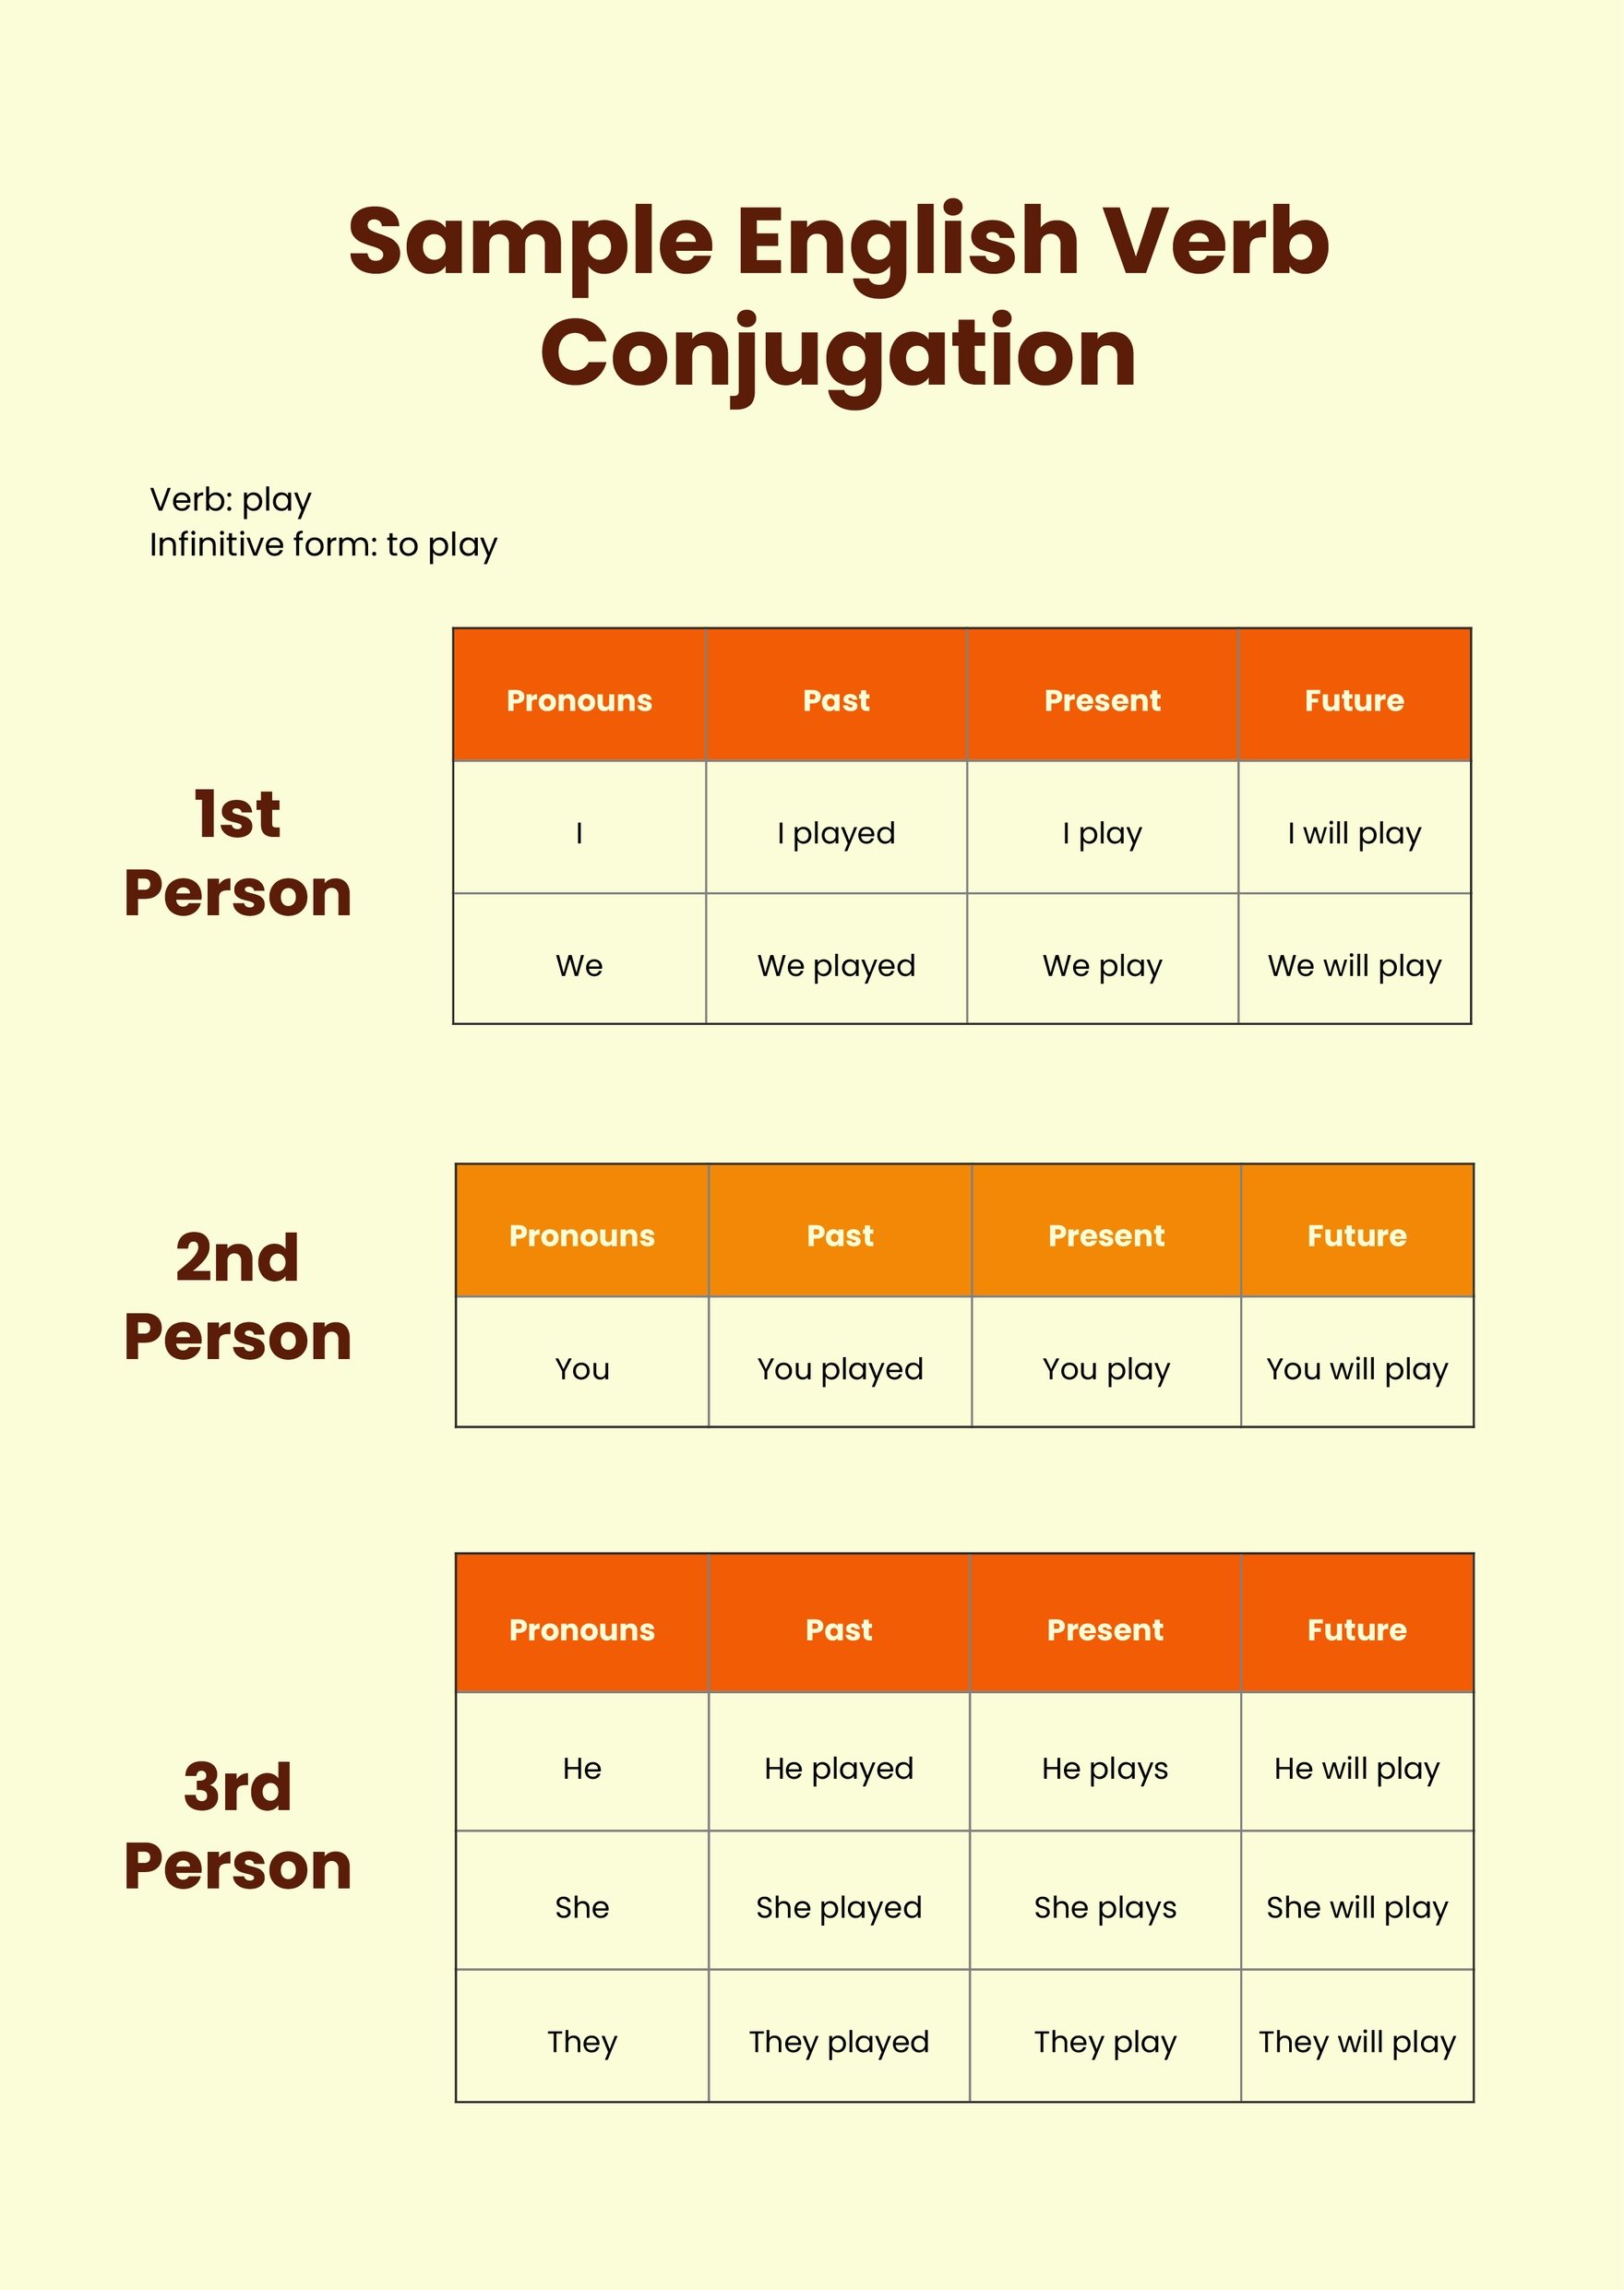 Conjugation Chart in PDF, Illustrator